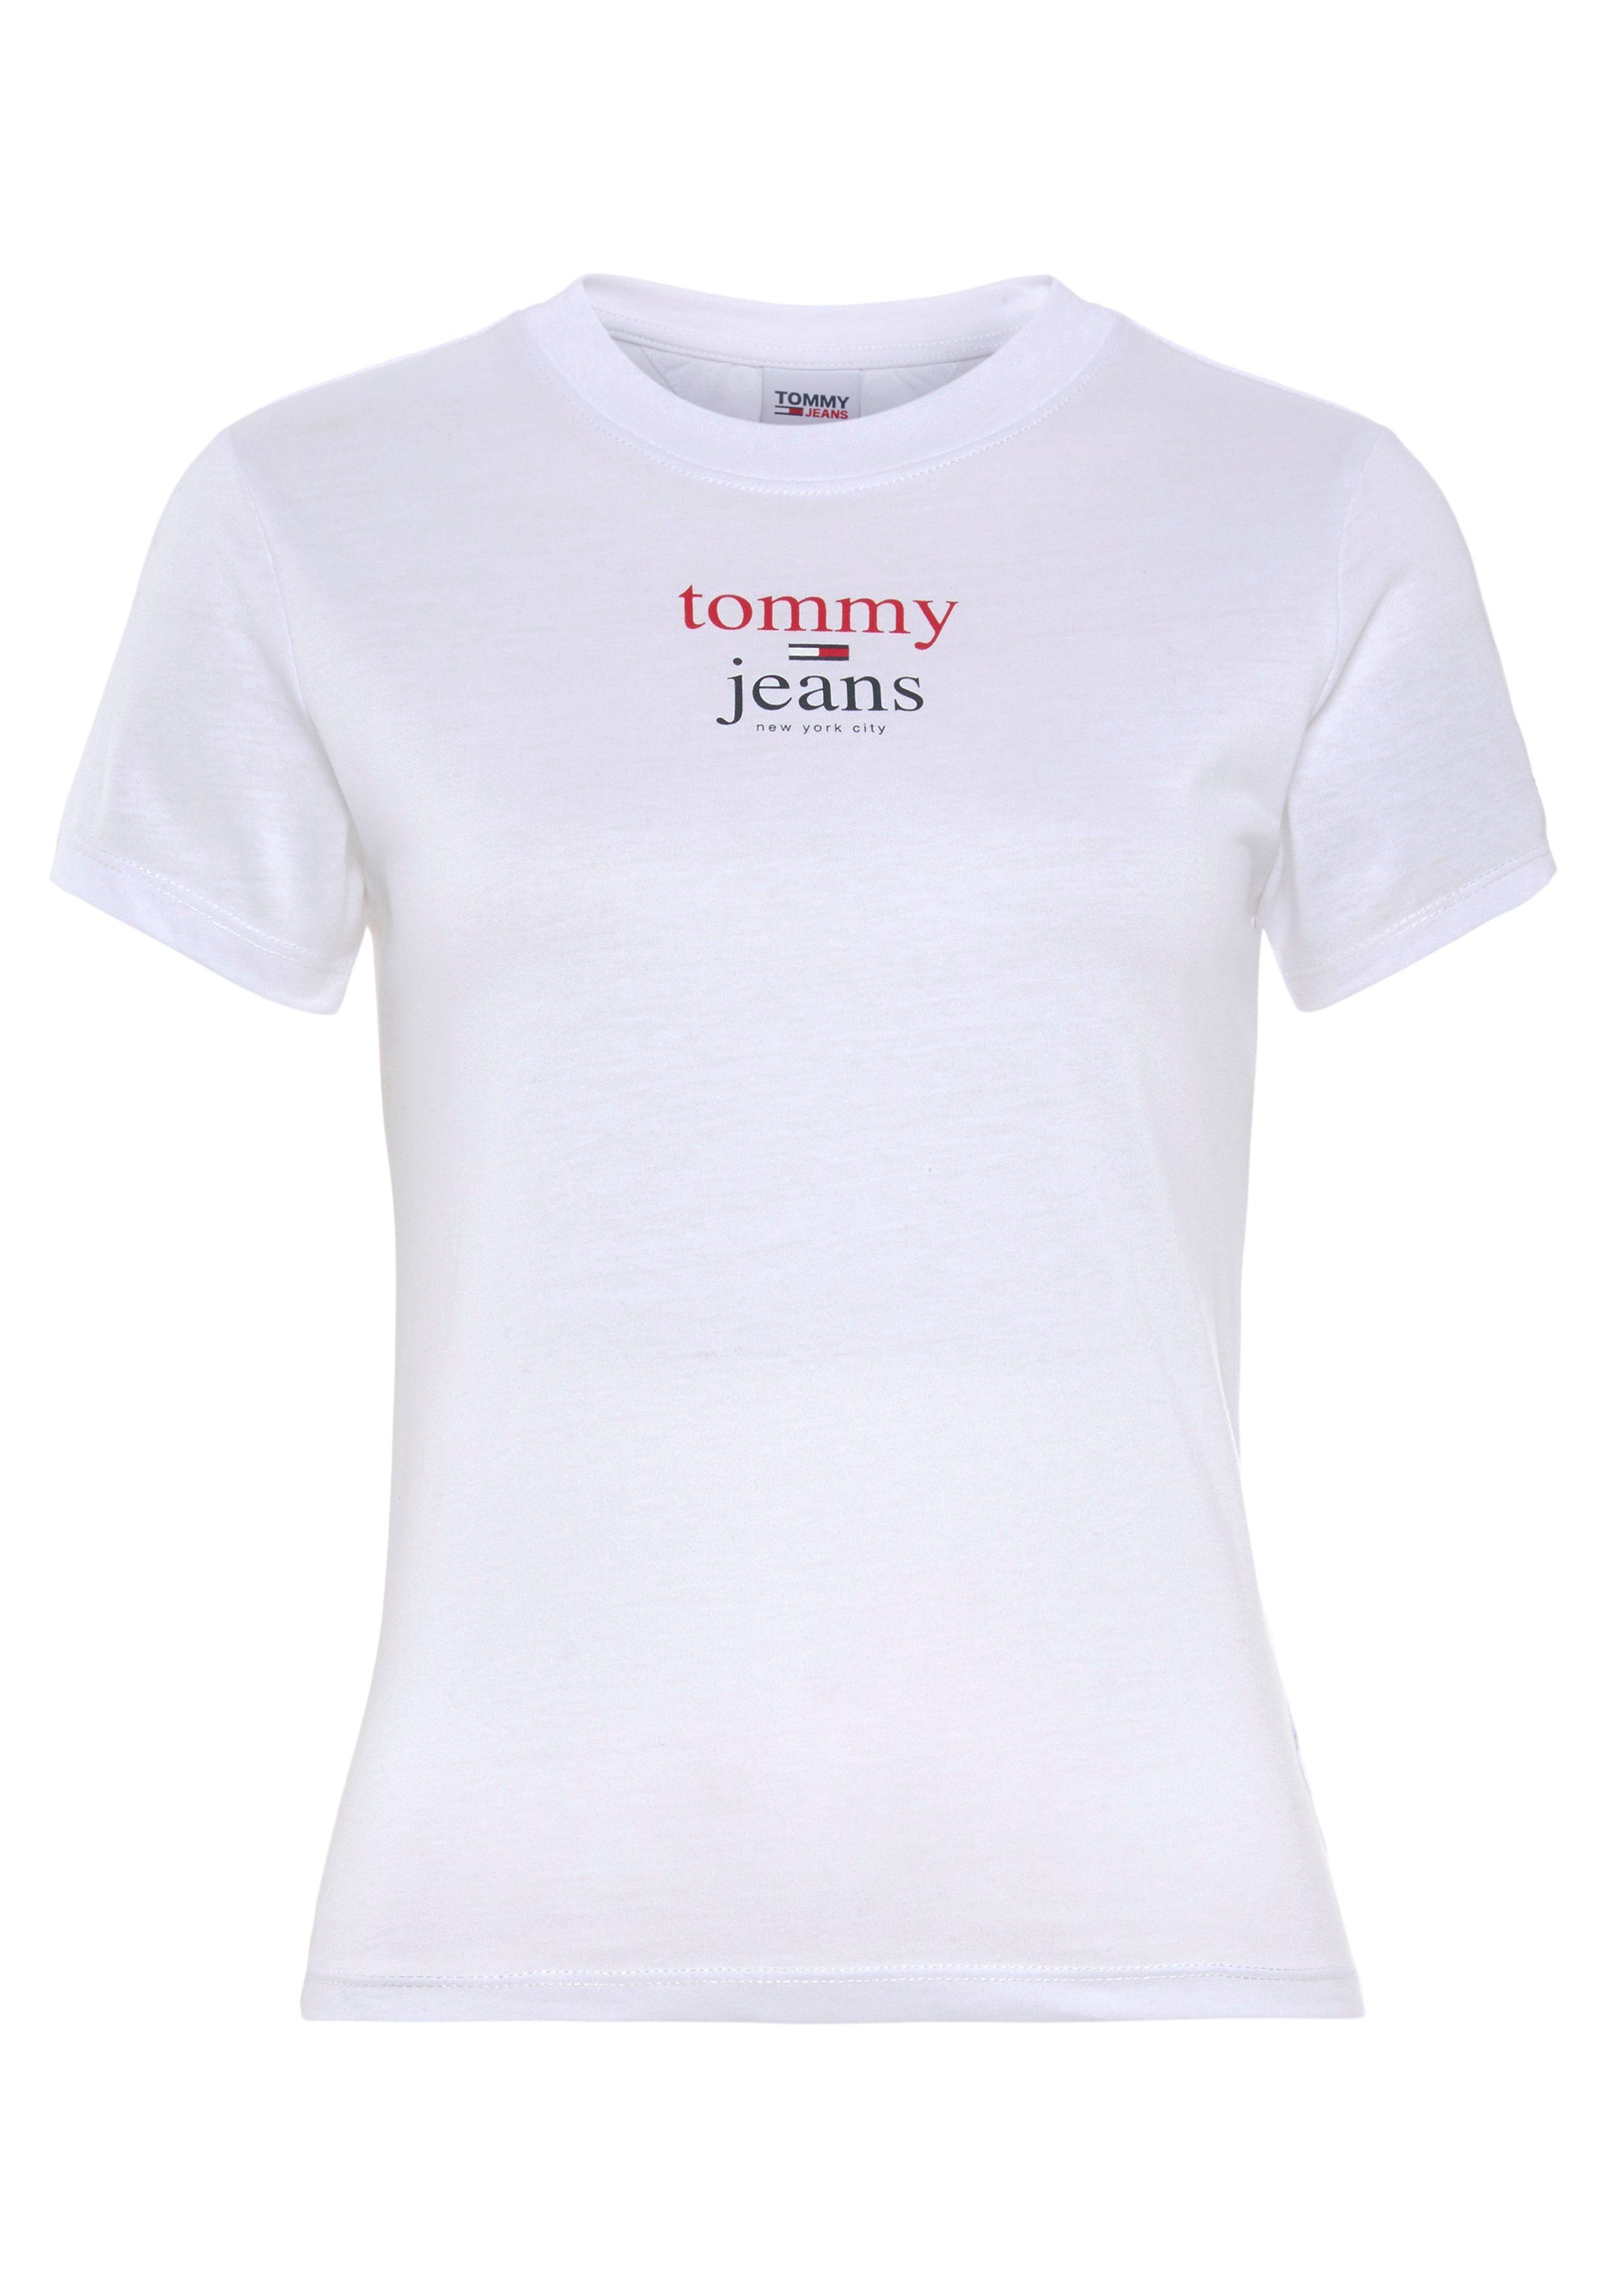 TJW White im SS BABY Jeans 2 Jeans Basic-Style Kurzarmshirt Schriftzug mit Tommy ESSENTIAL LOGO Tommy